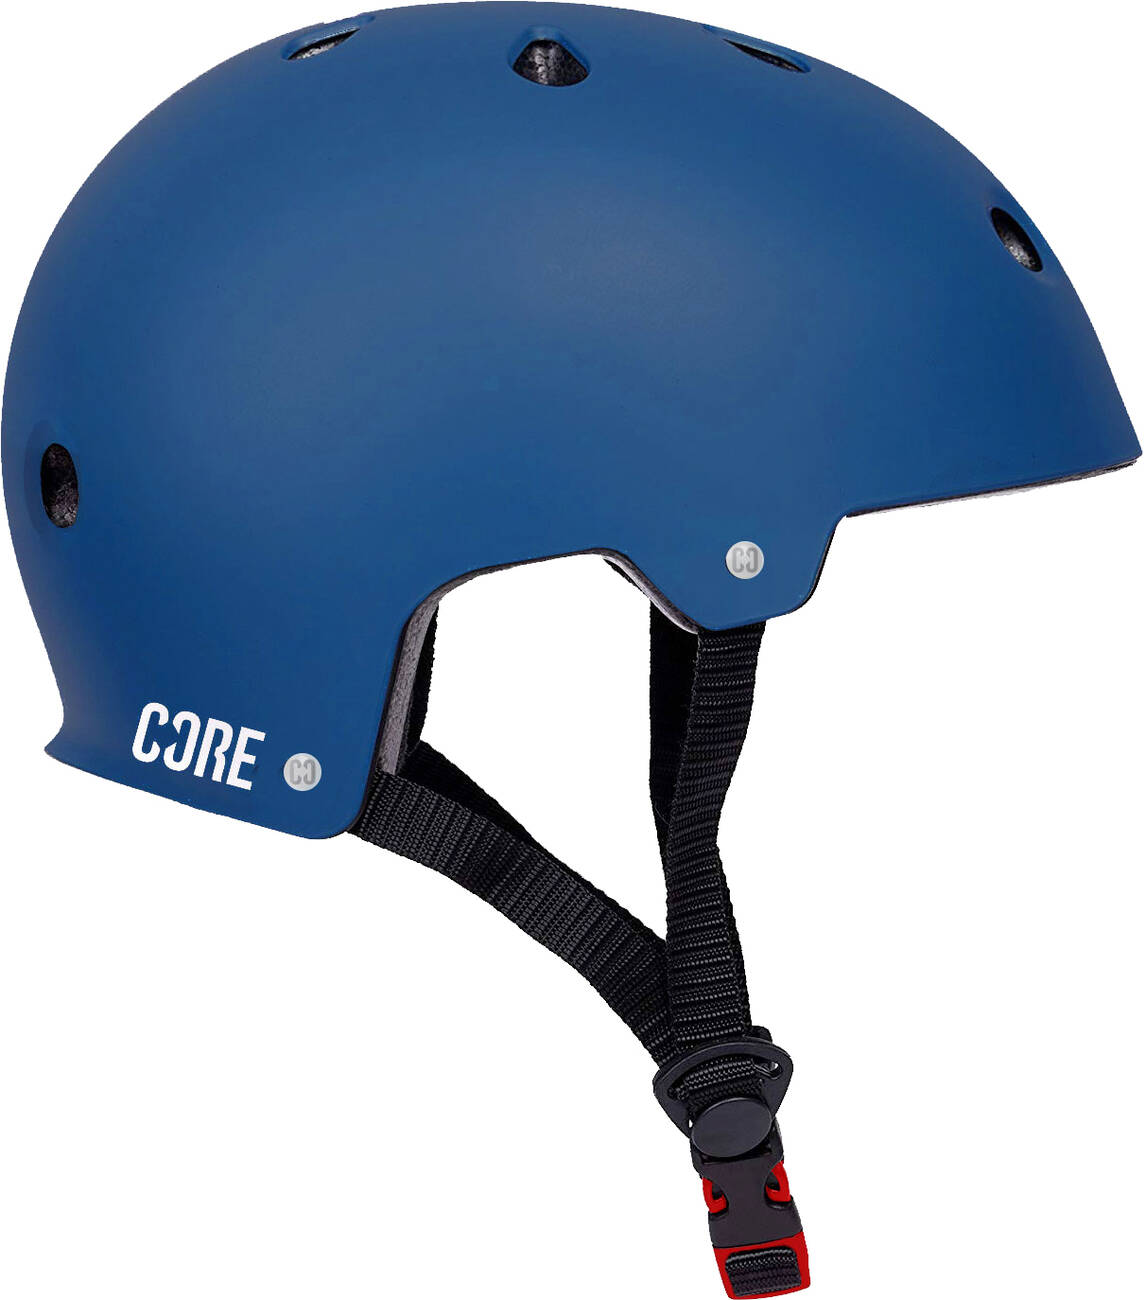 CORE Action Sports casco skate e casco da bici blu navy